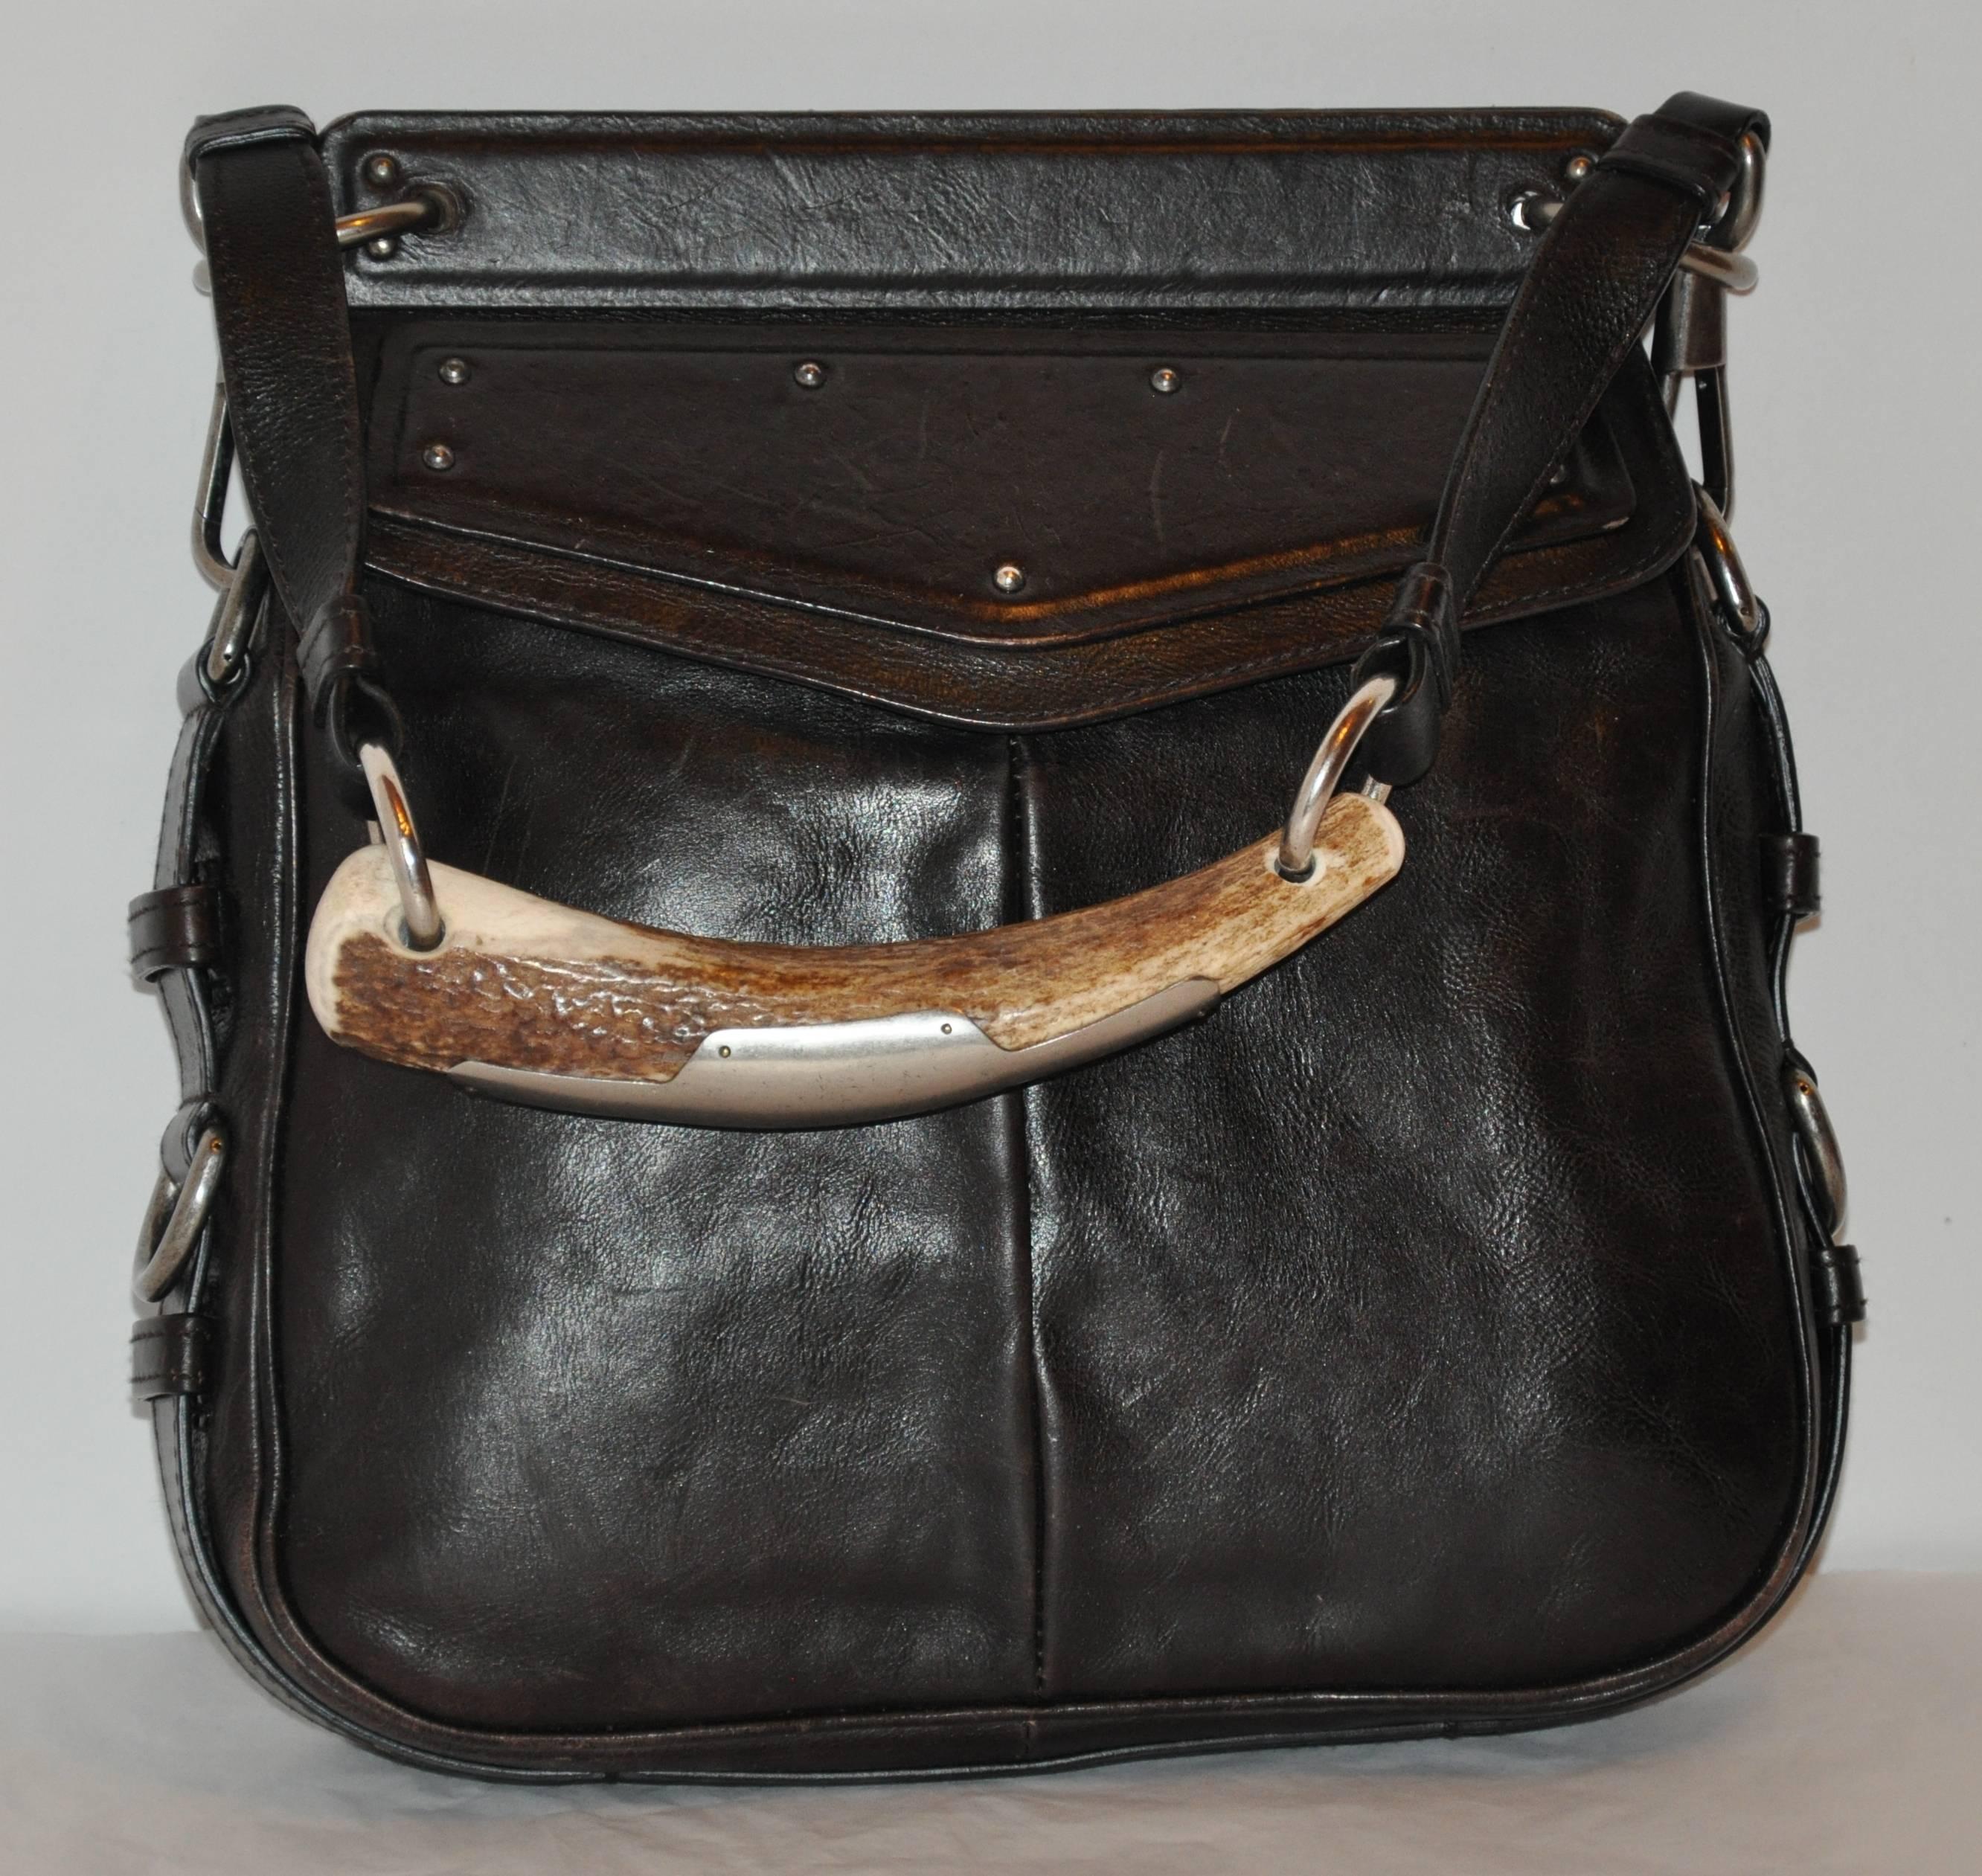              Yves Saint Laurent detailed black calfskin handbag features a large 